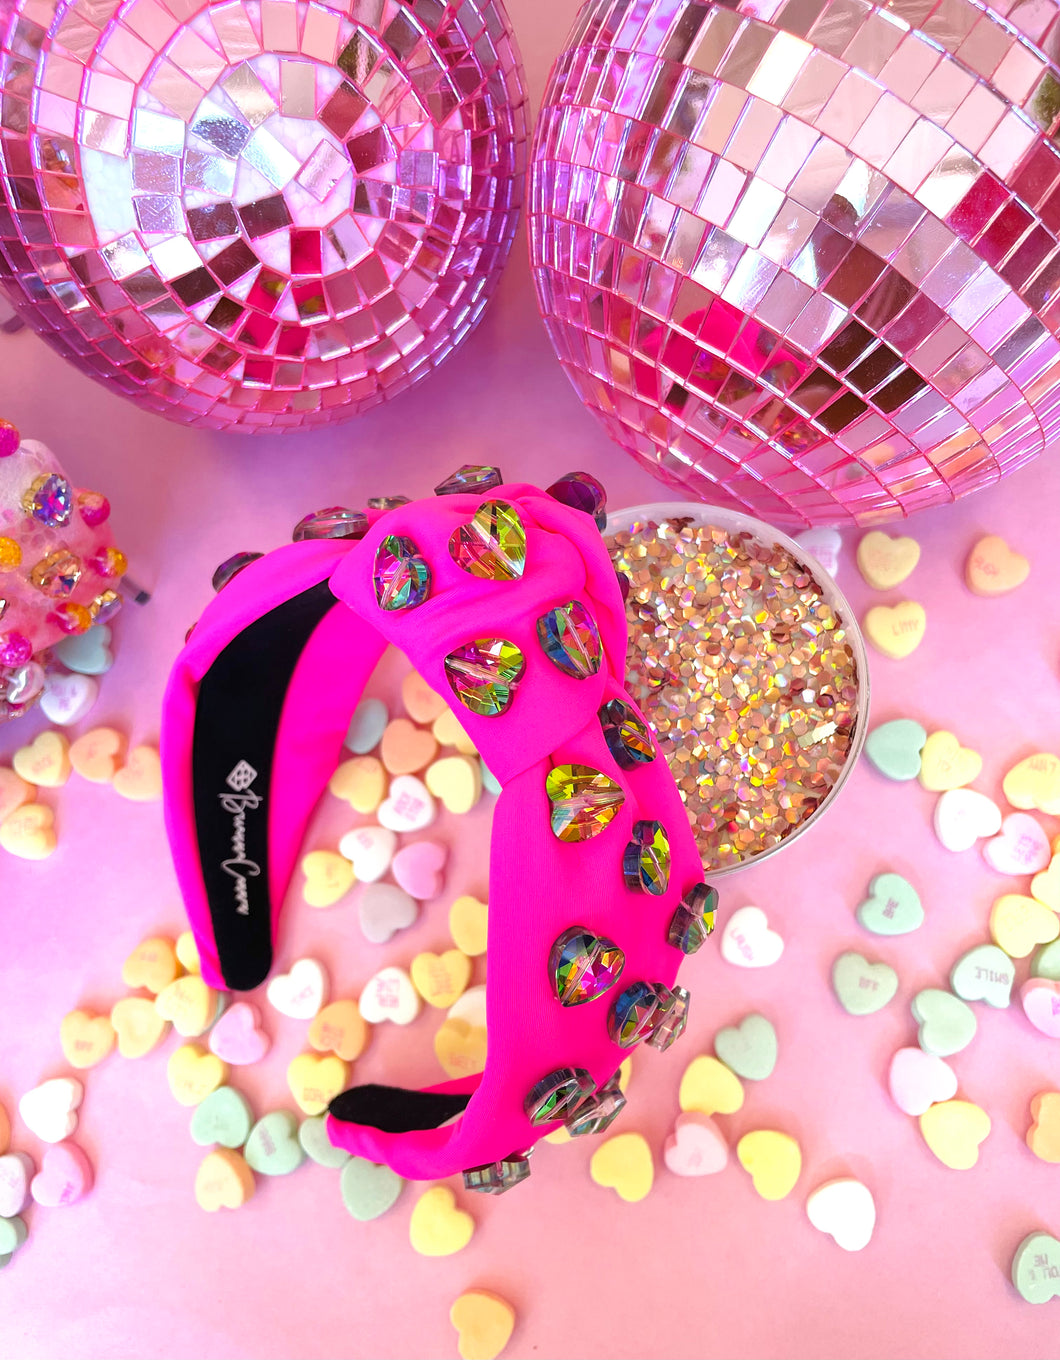 The Brianna Cannon Neon Pink Heart Headband